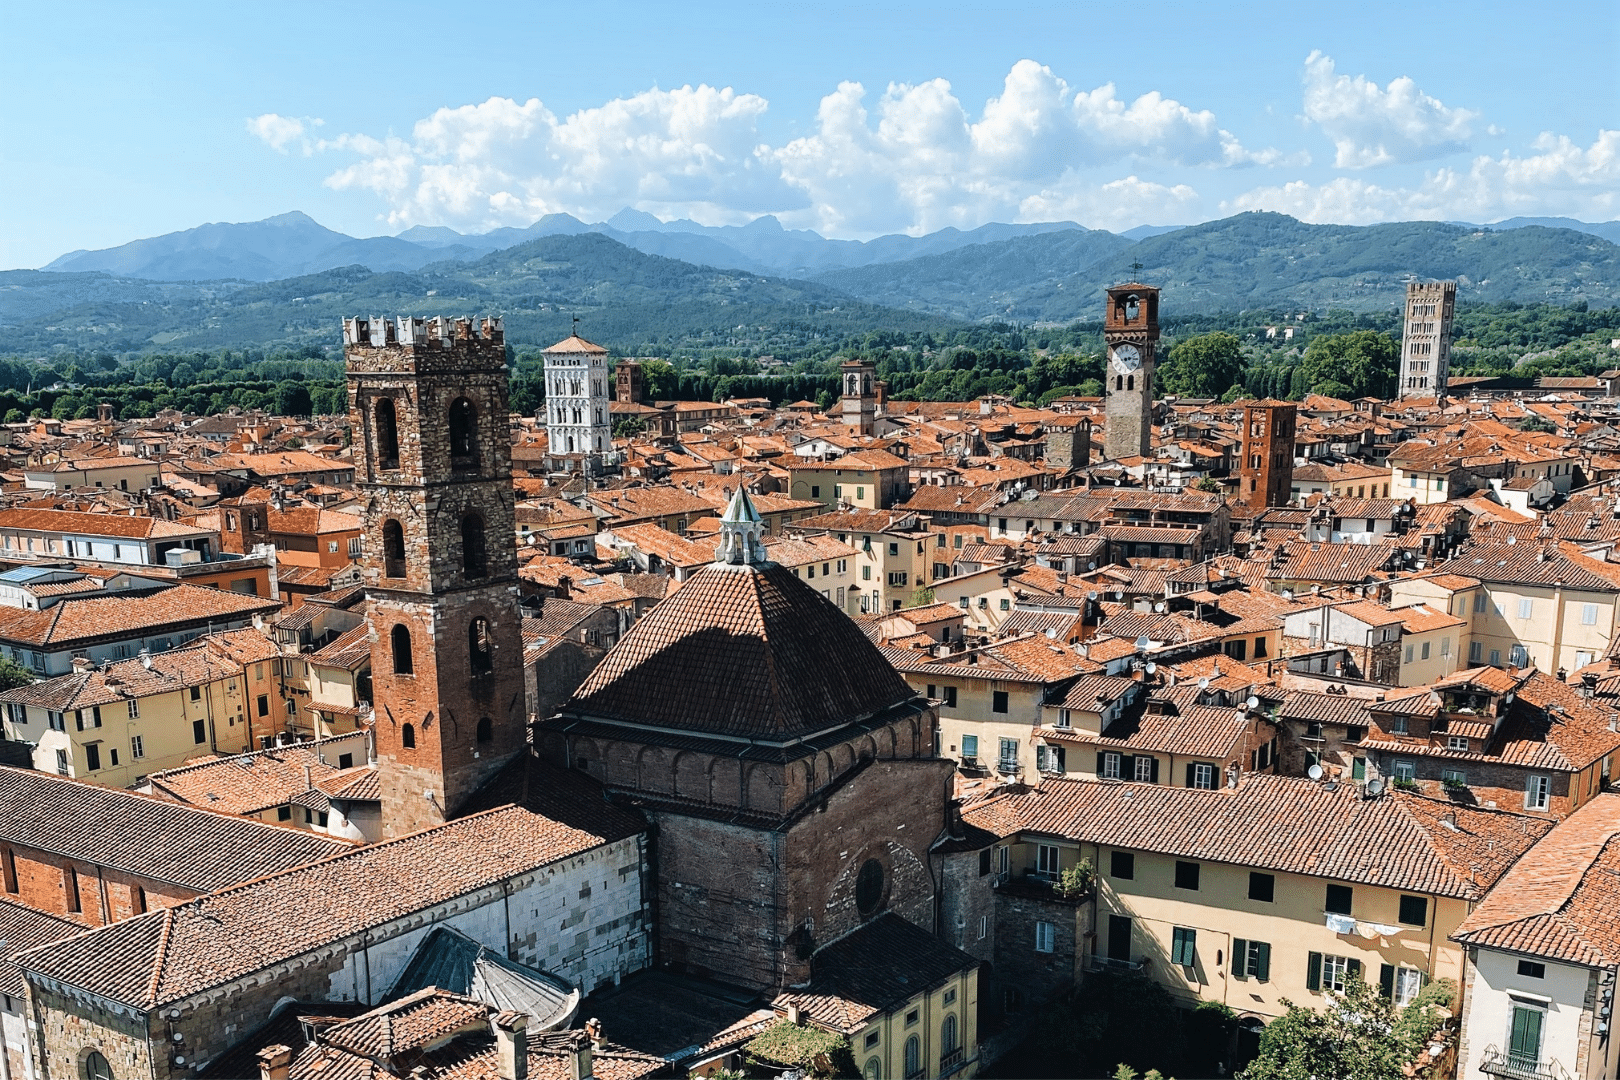 2italia Experiences. Bird eye view of Lucca